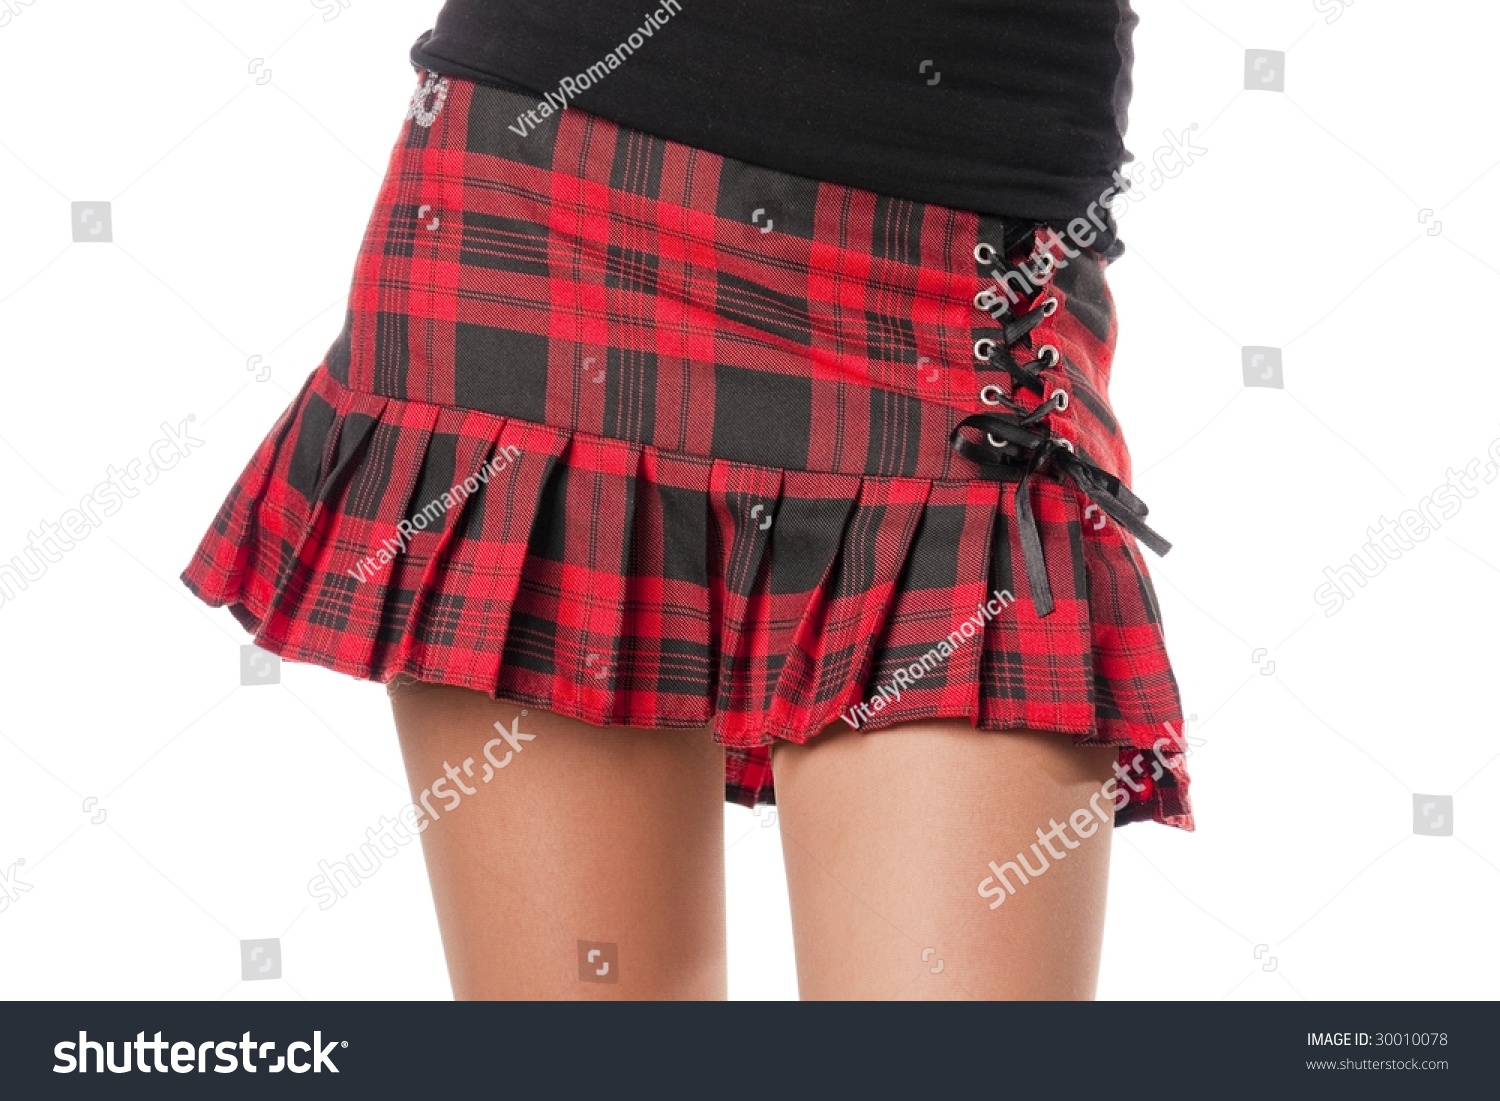 Plaid Skirt Stock Photo 30010078 - Shutterstock